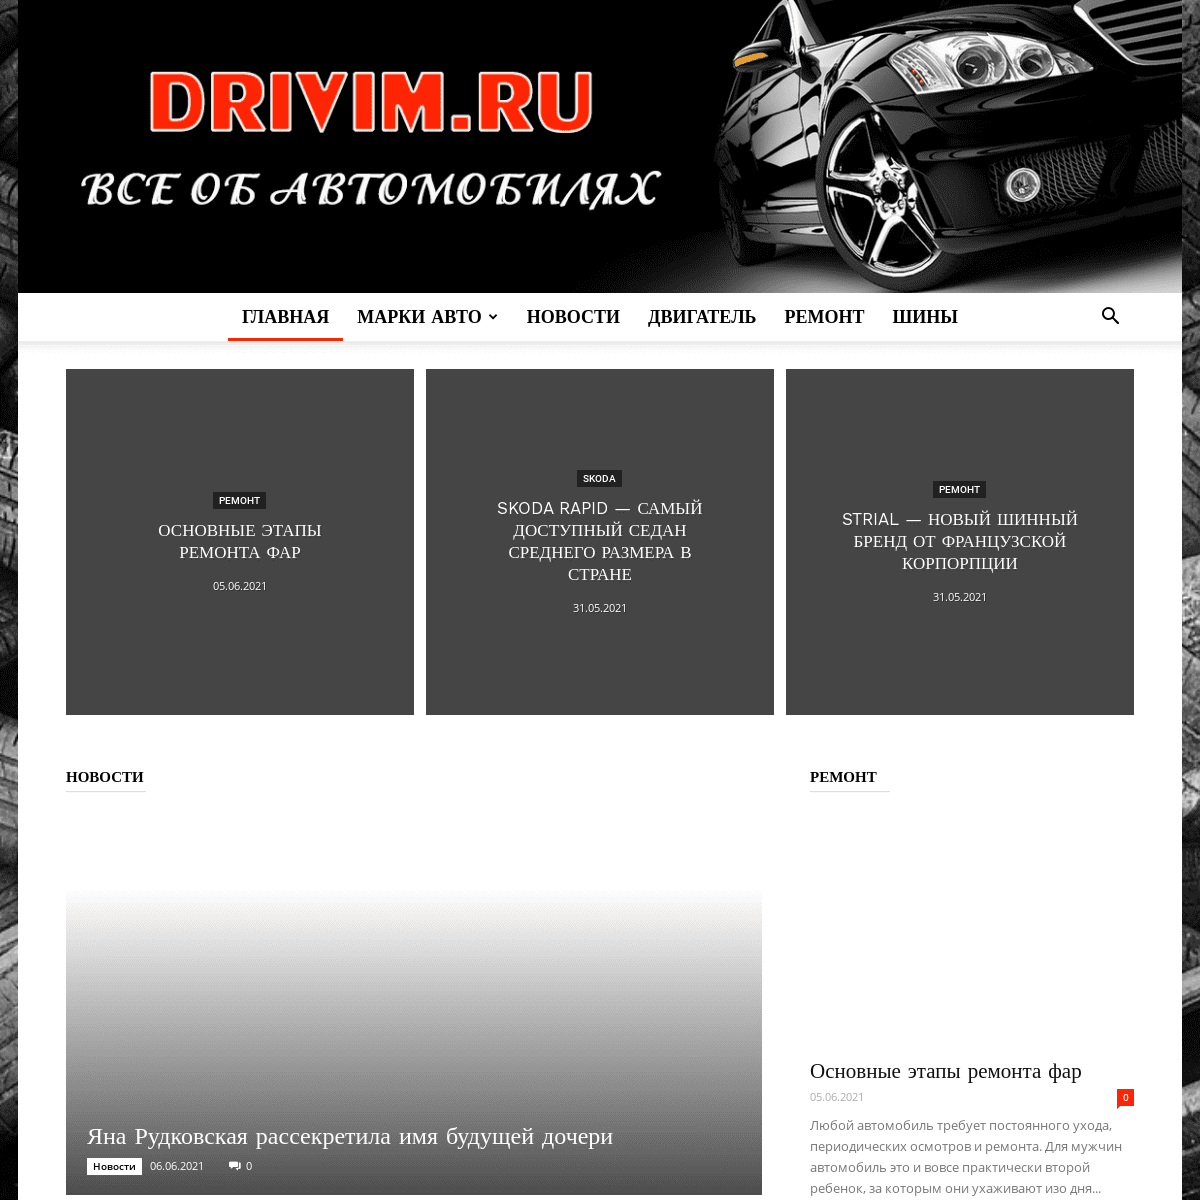 A complete backup of https://drivim.ru